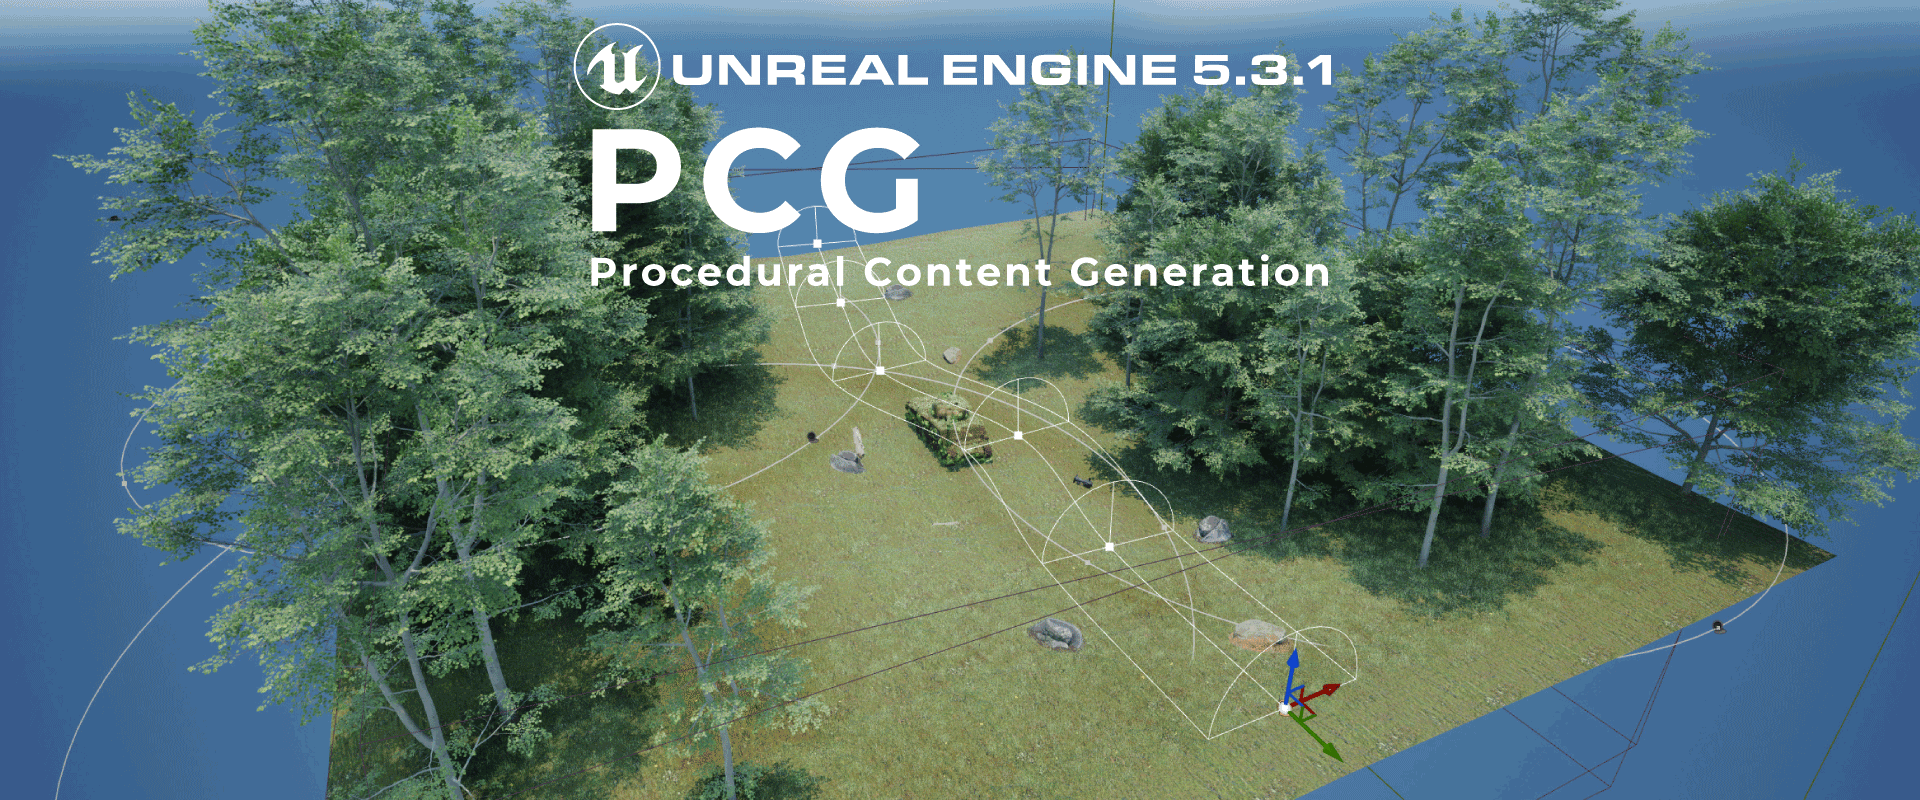 [ Unreal Engine 5.3.1 ] Procedural Content Generation (PCG) の使用方法について